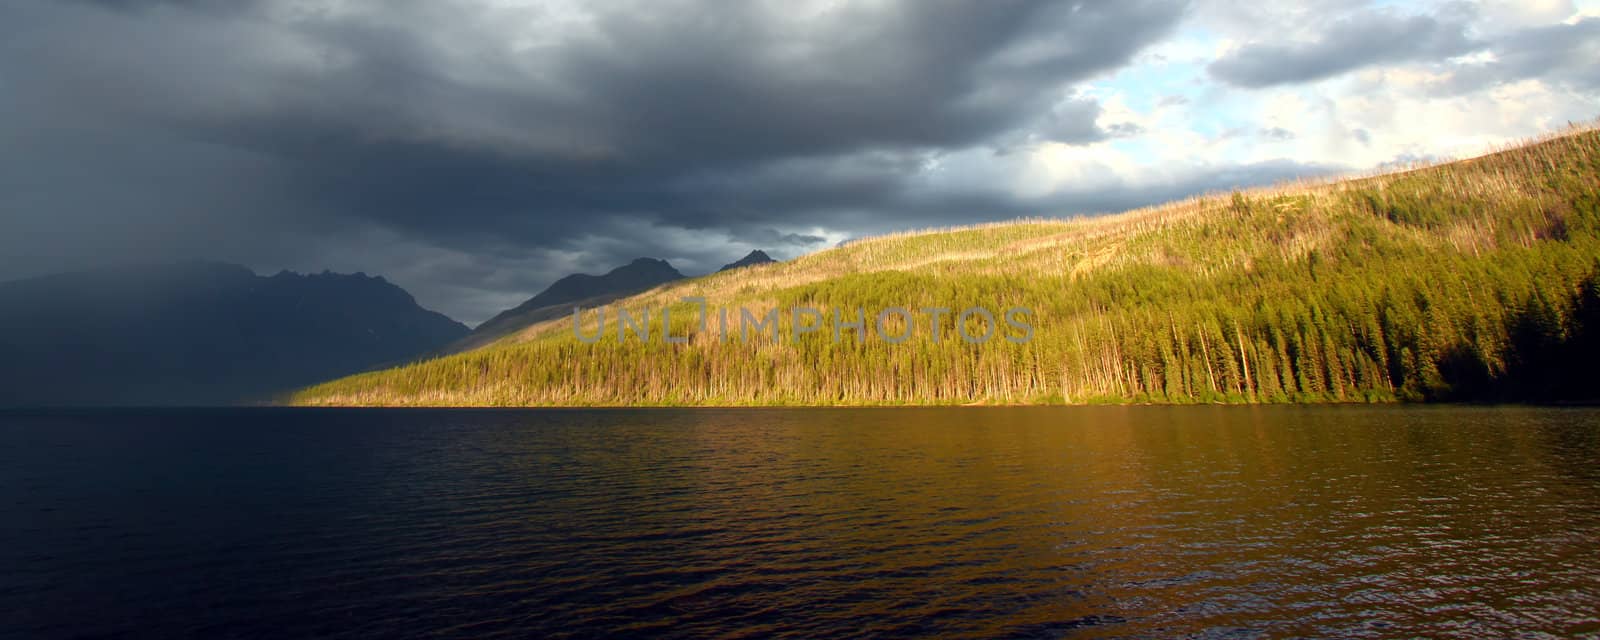 Kintla Lake - Glacier National Park by Wirepec